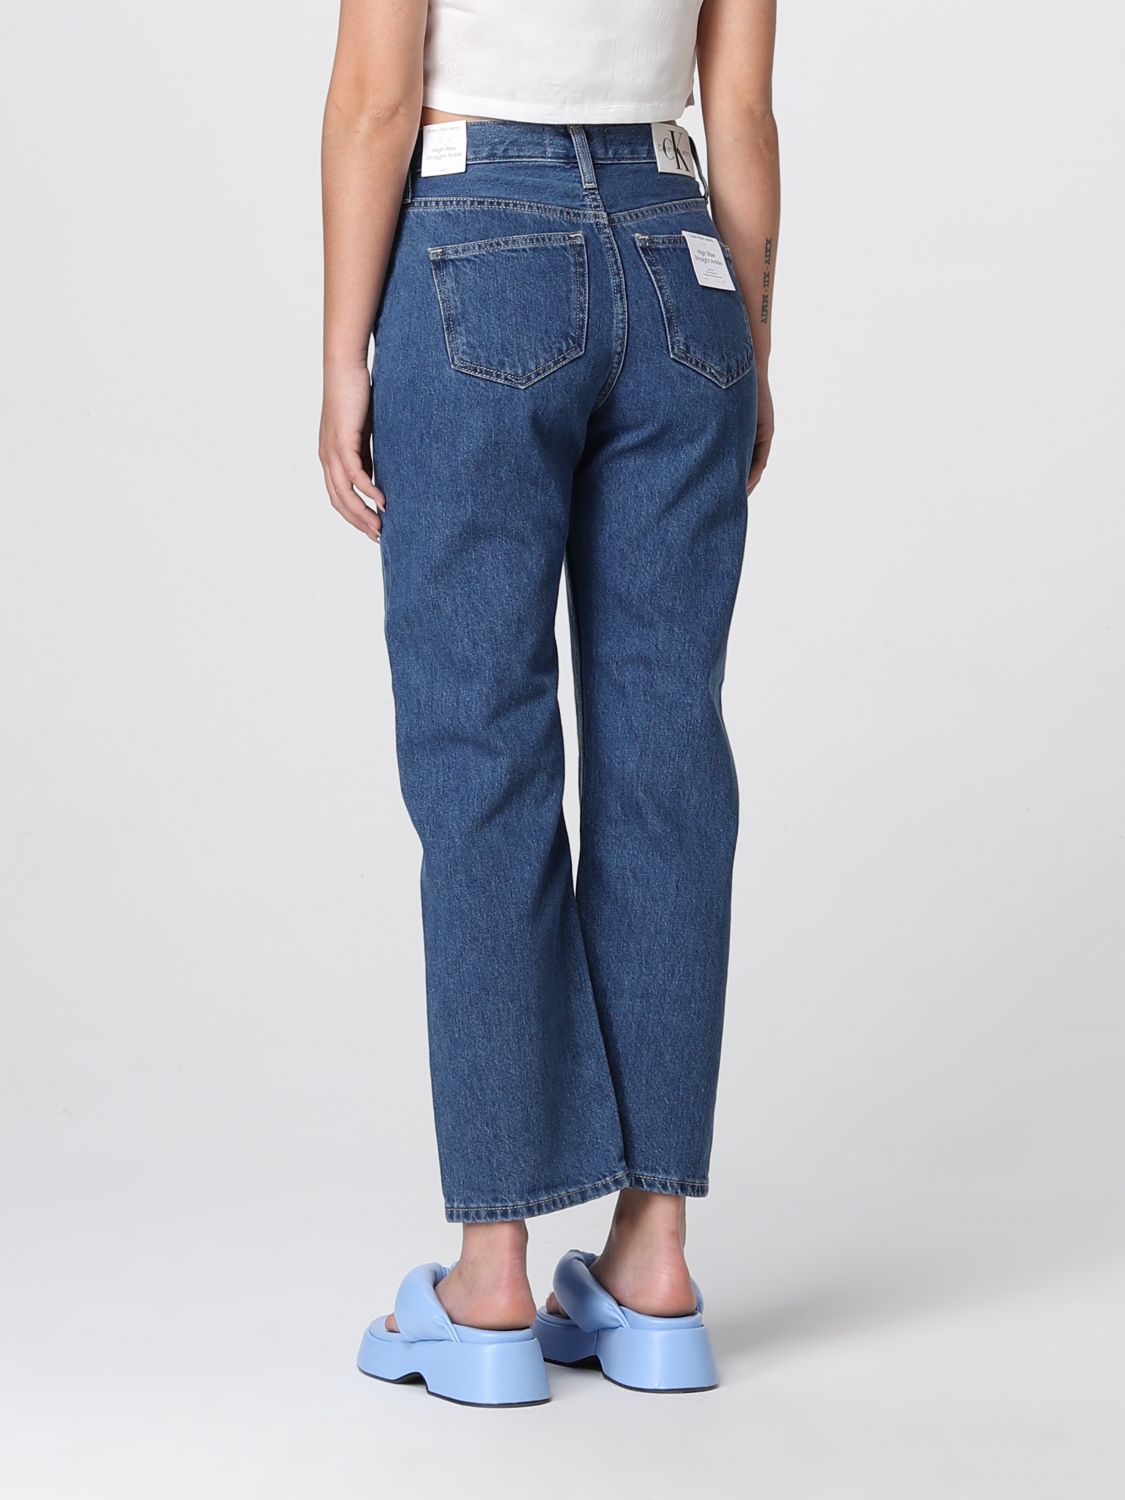 CALVIN KLEIN JEANS: Jeans women - Denim | Jeans Calvin Klein Jeans ...